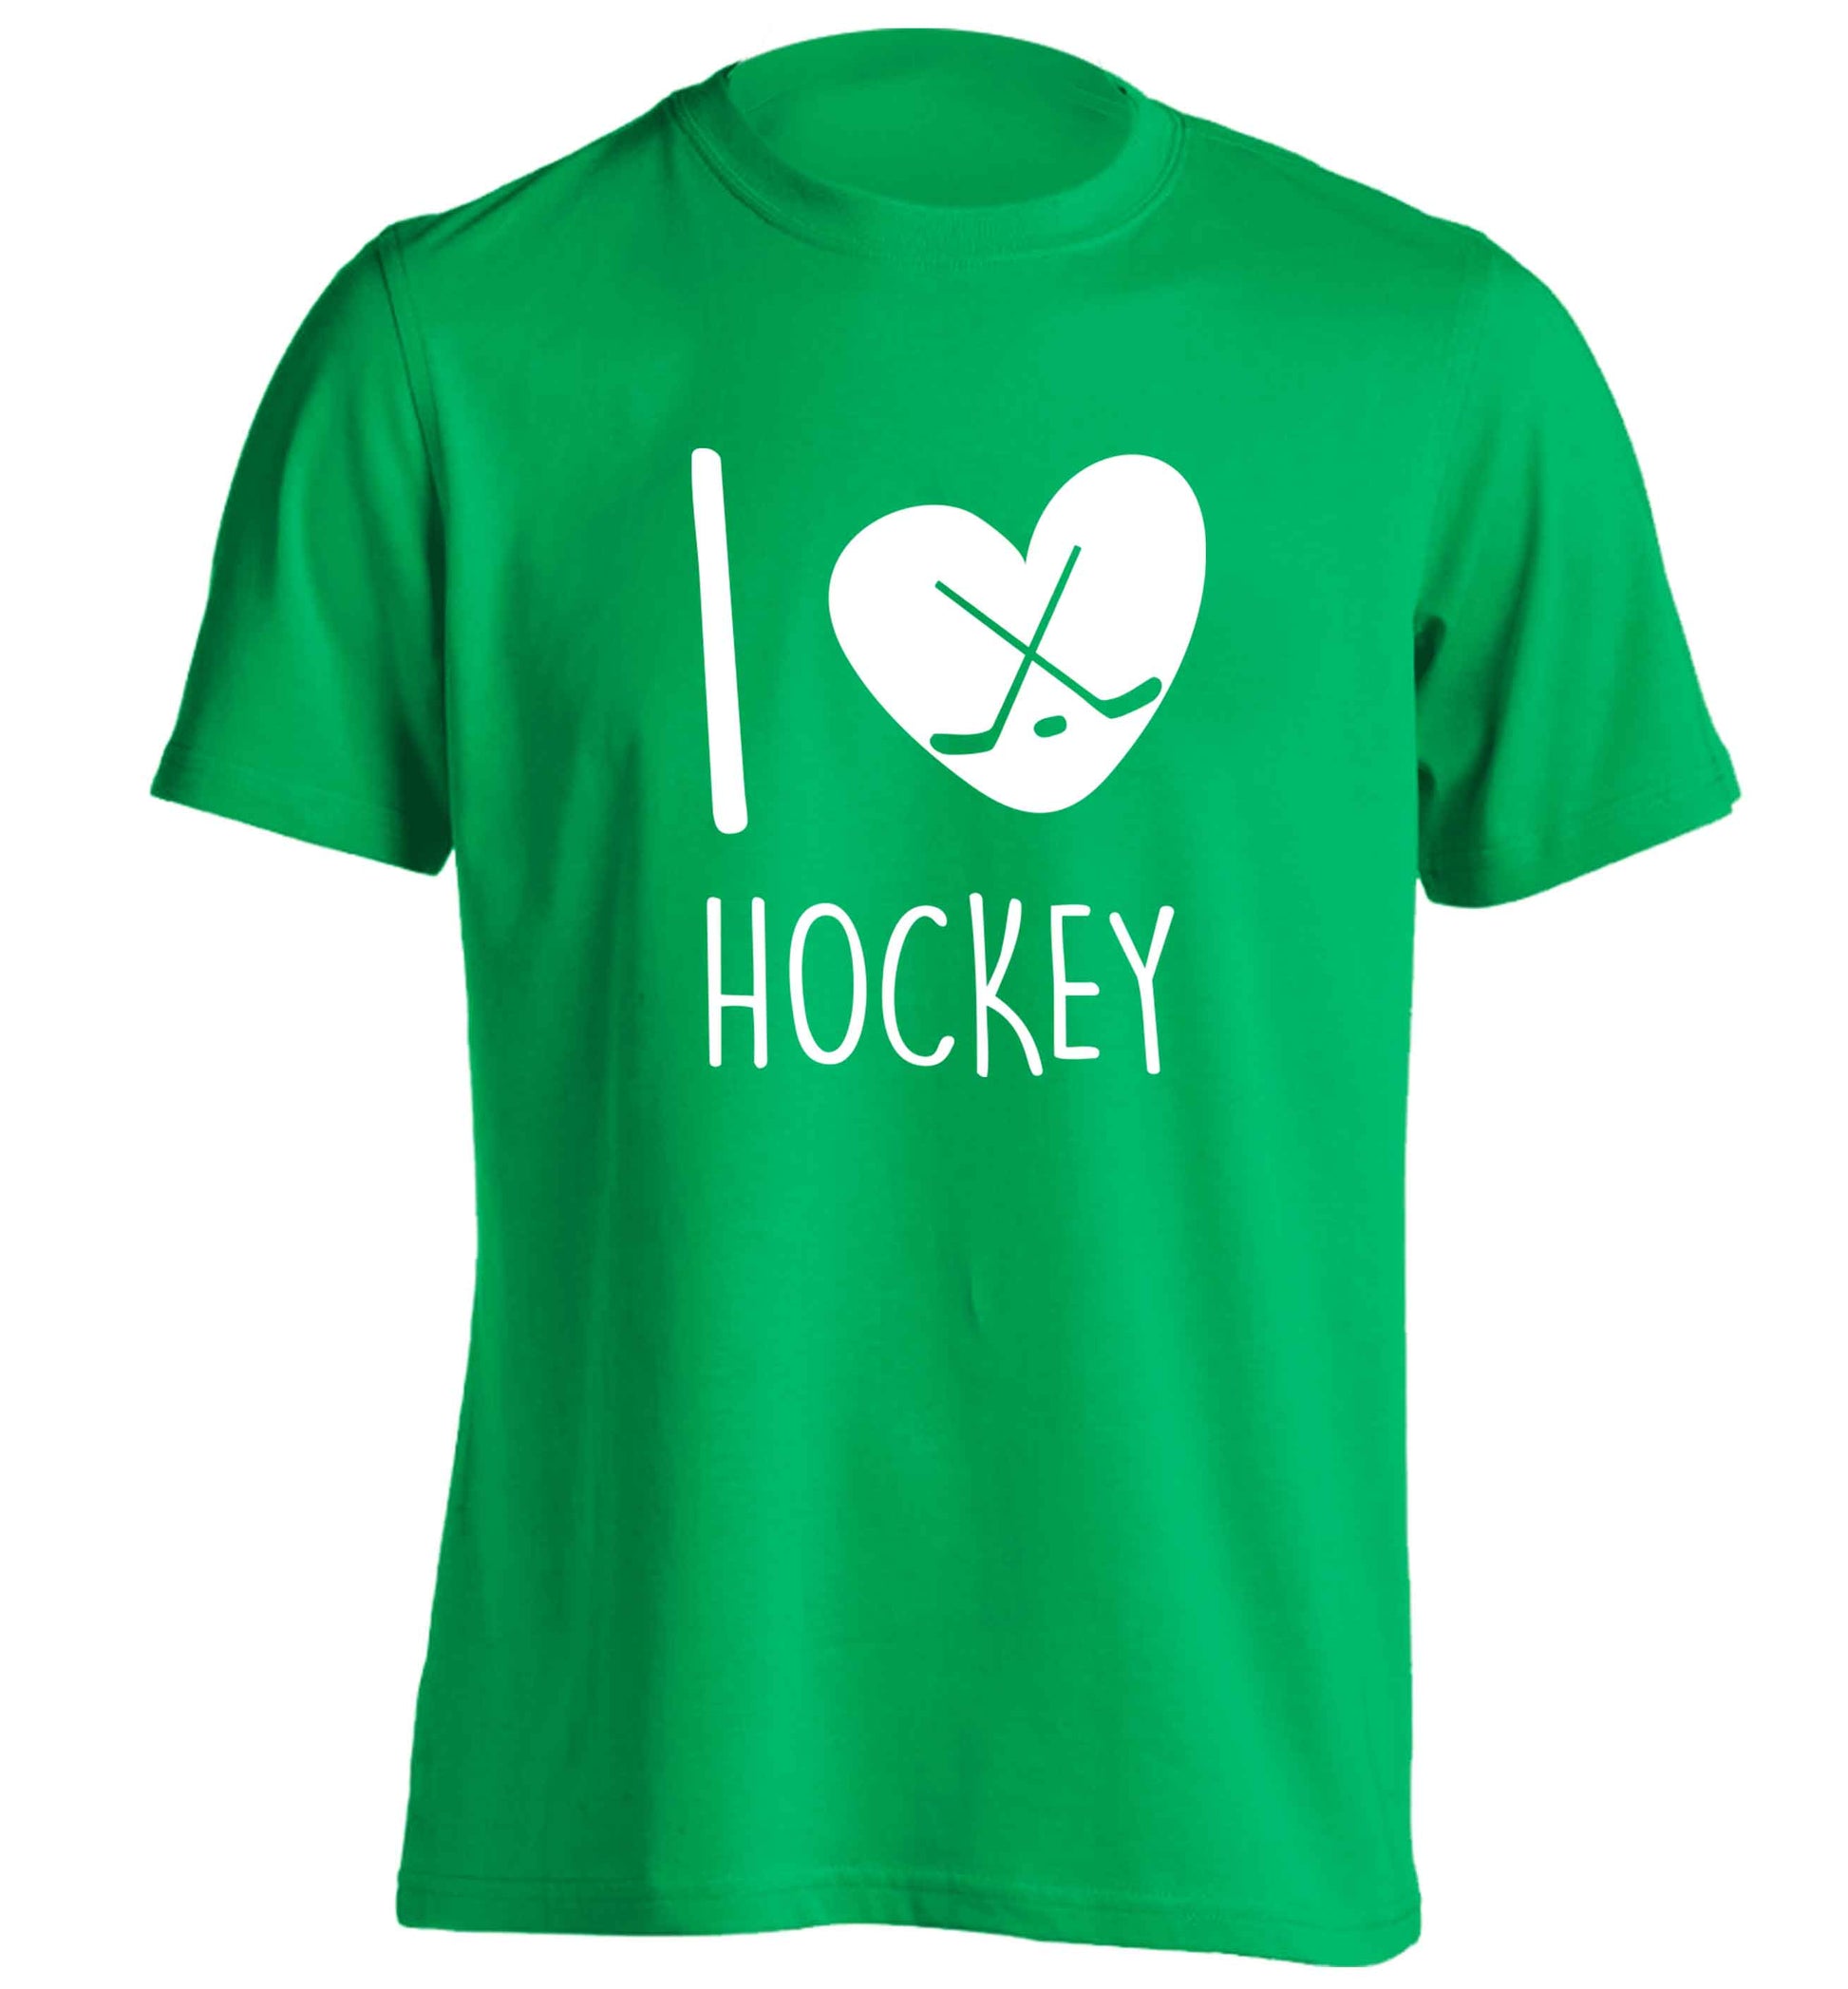 I love hockey adults unisex green Tshirt 2XL